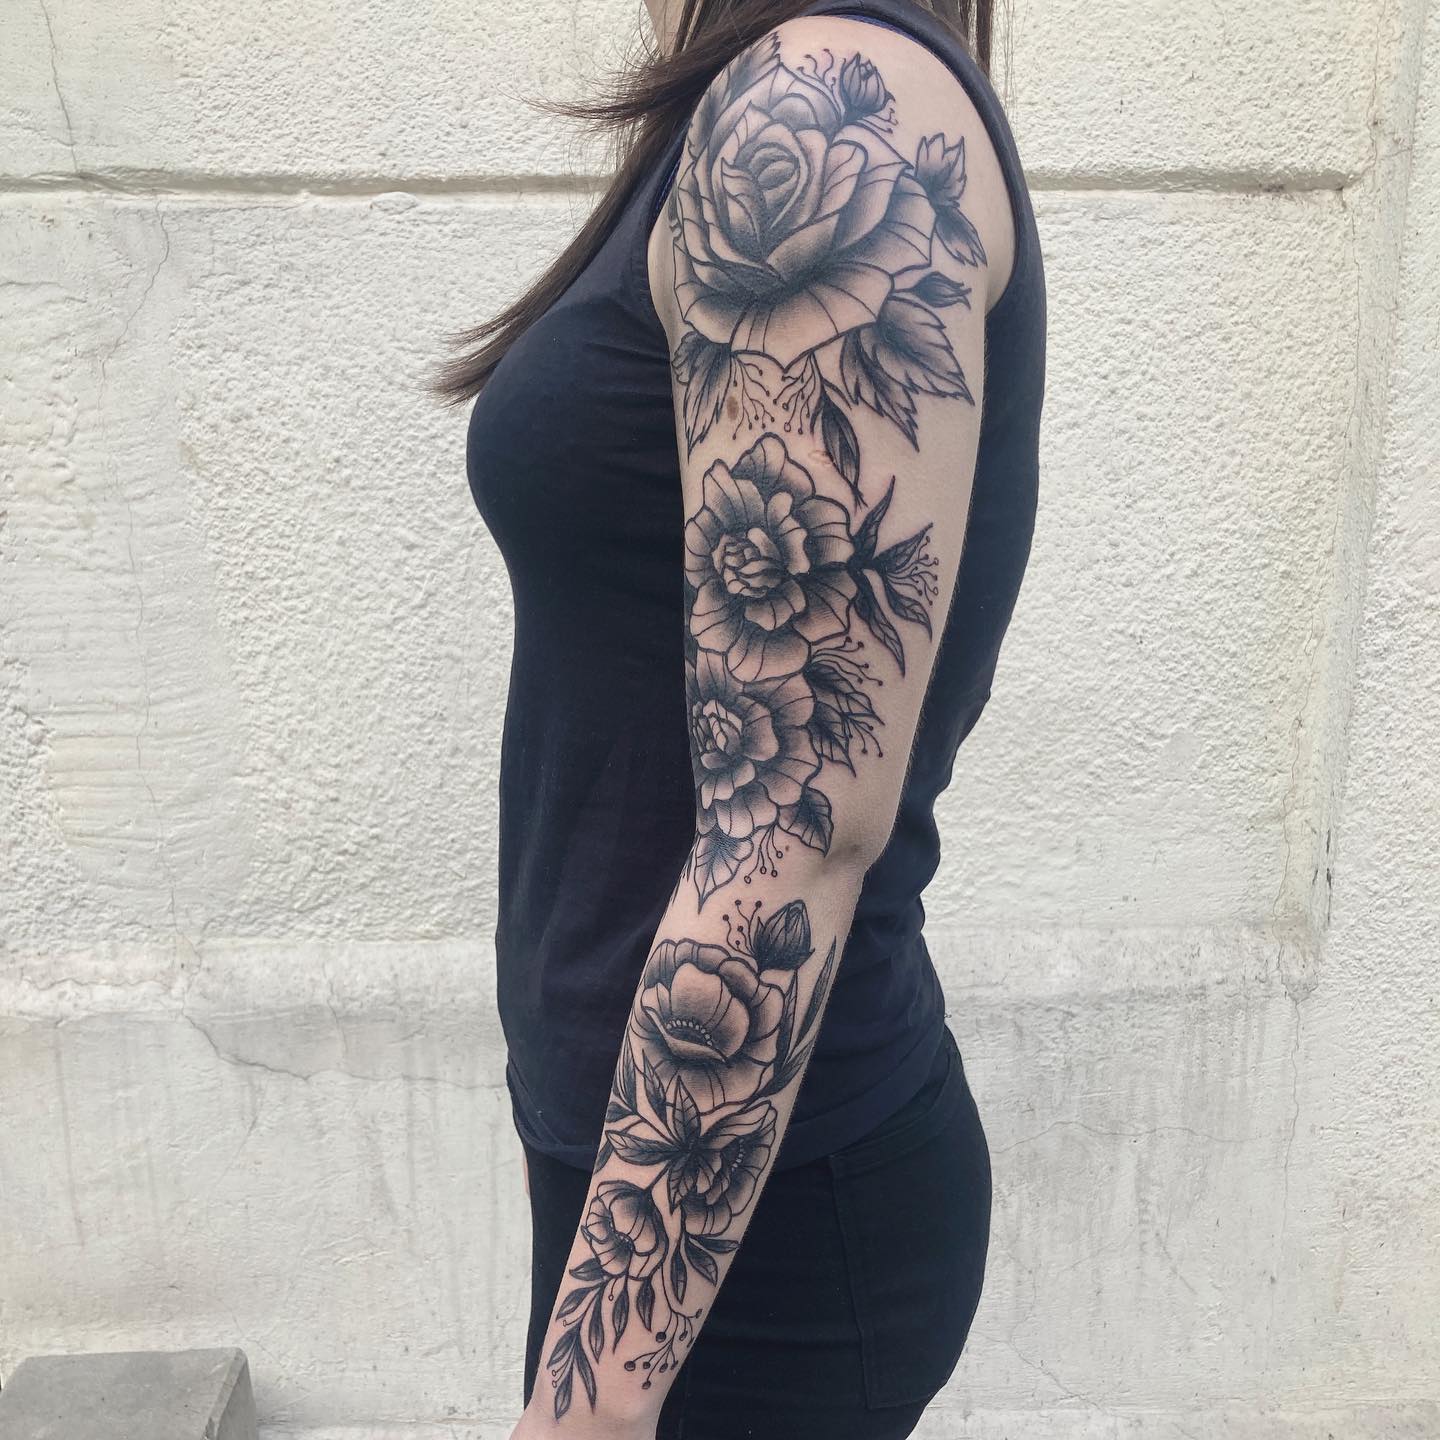 25 Sleeve Tattoos For Women